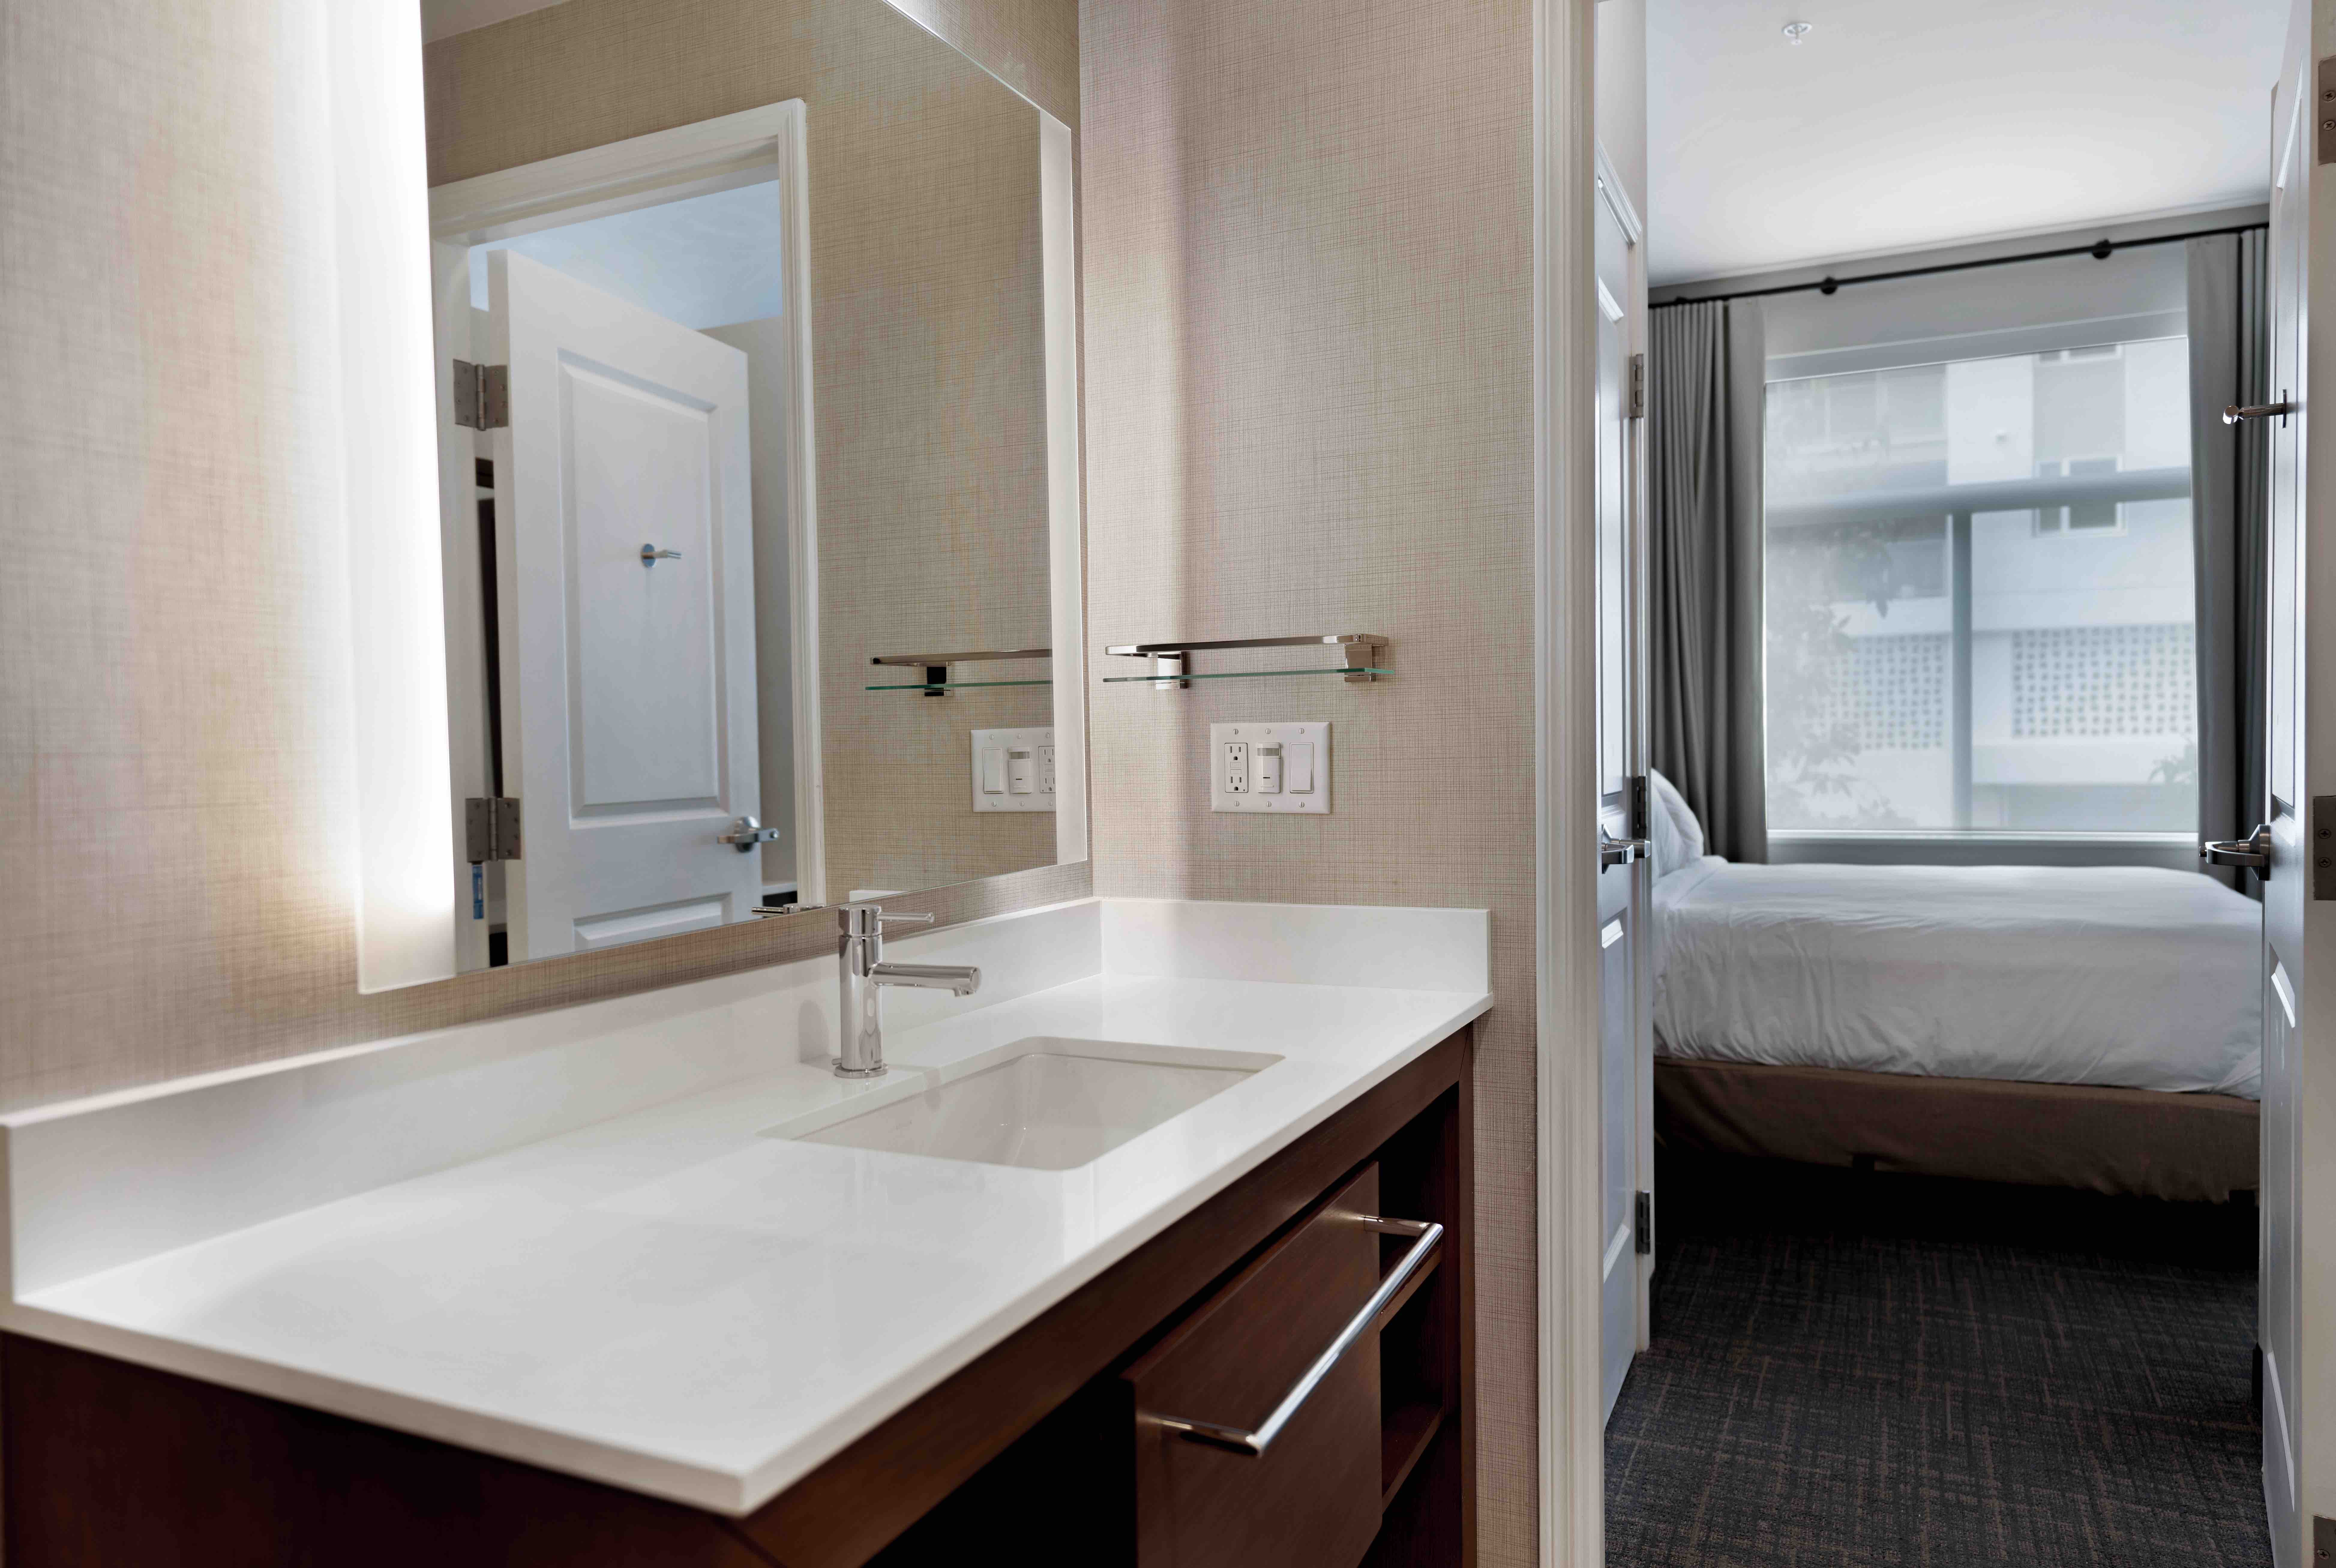 Bathroom of Residence Inn guest room in Marina del Rey